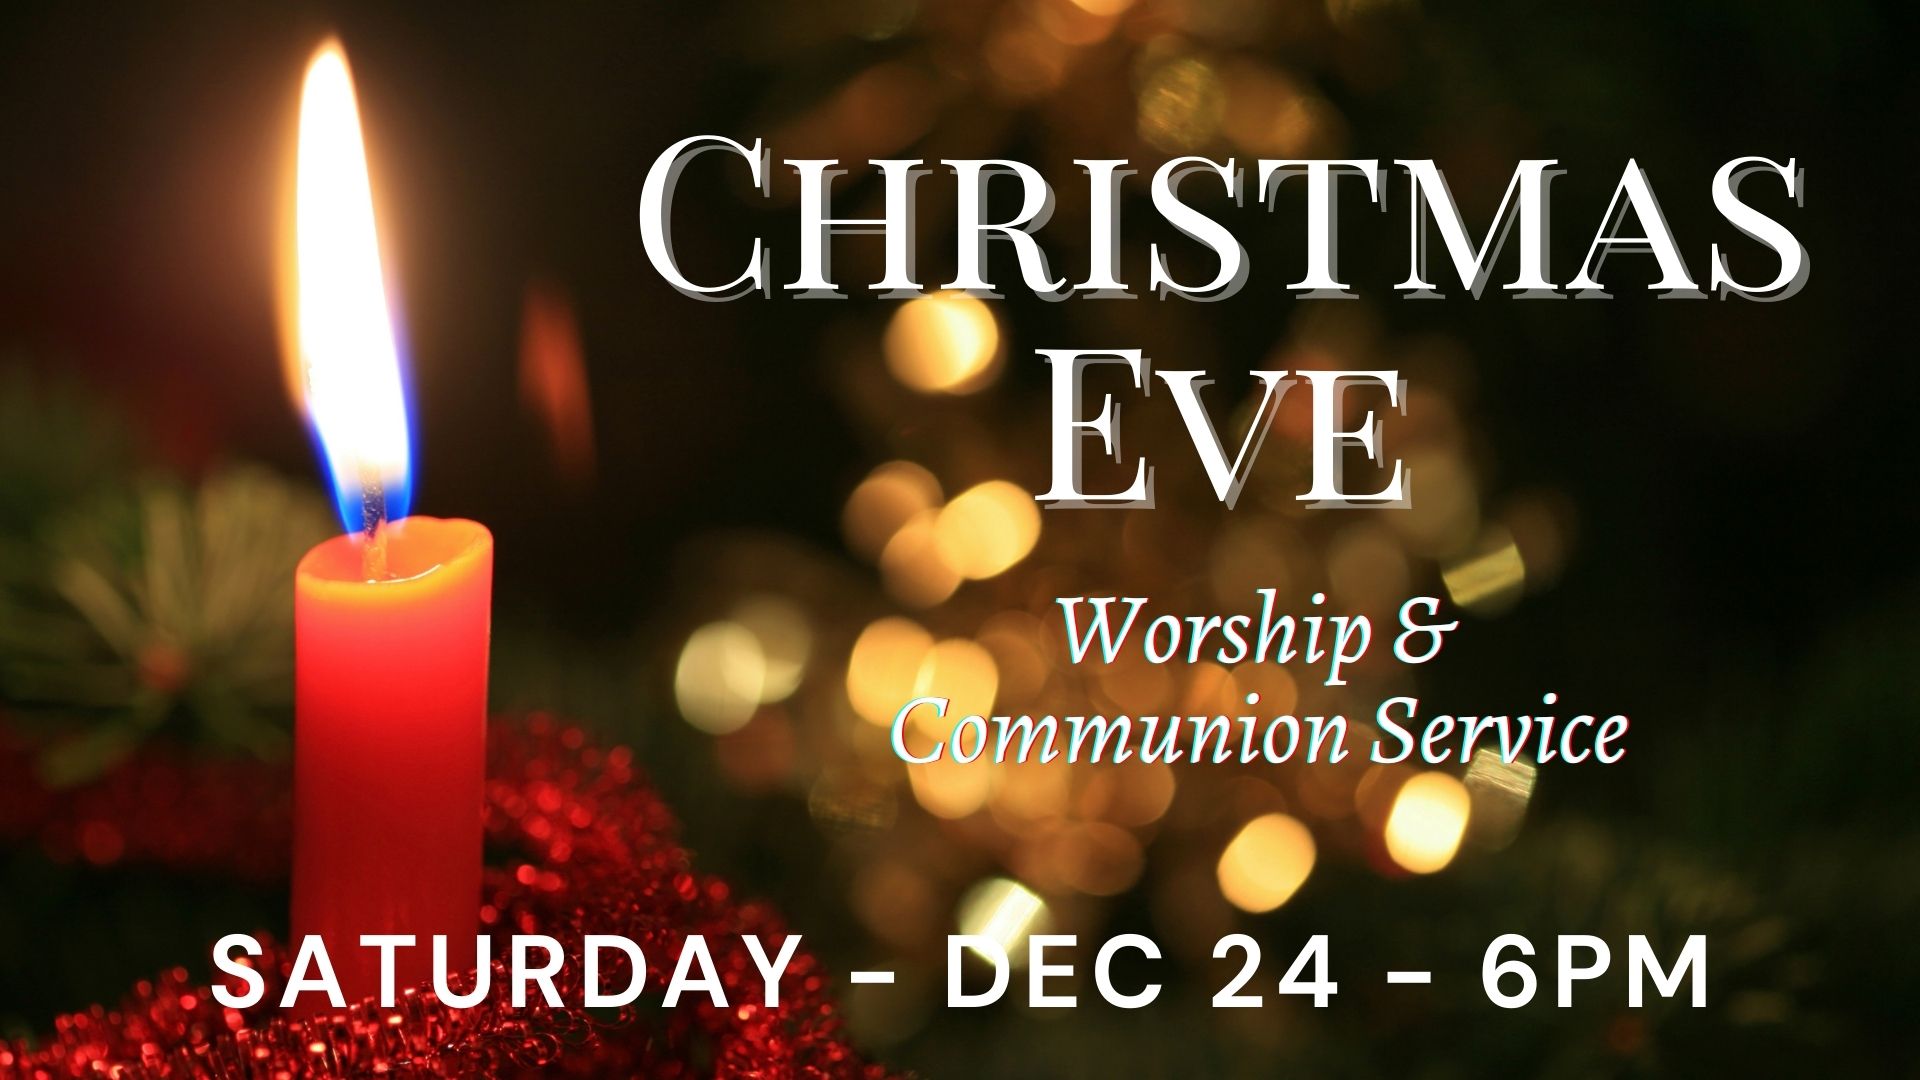 CHRISTMAS EVE WORSHIP & COMUNION SERVICE